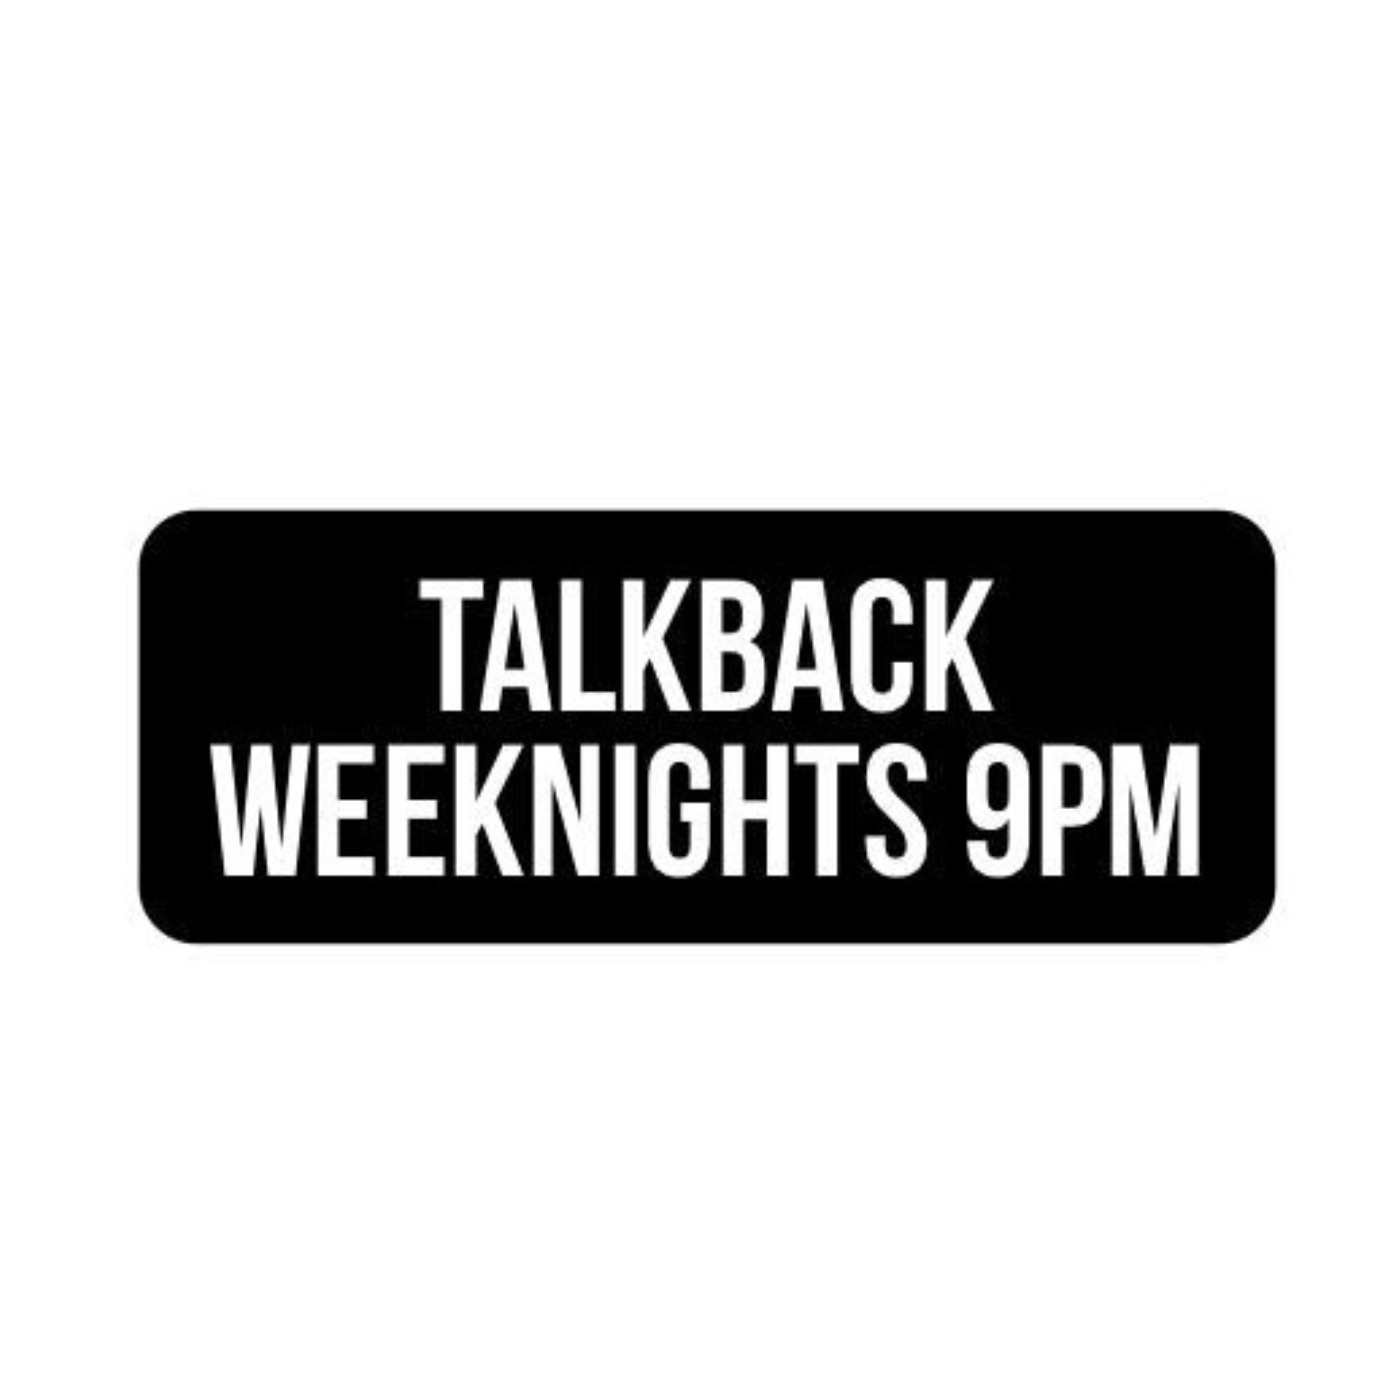 Artwork for Talkback Weeknights